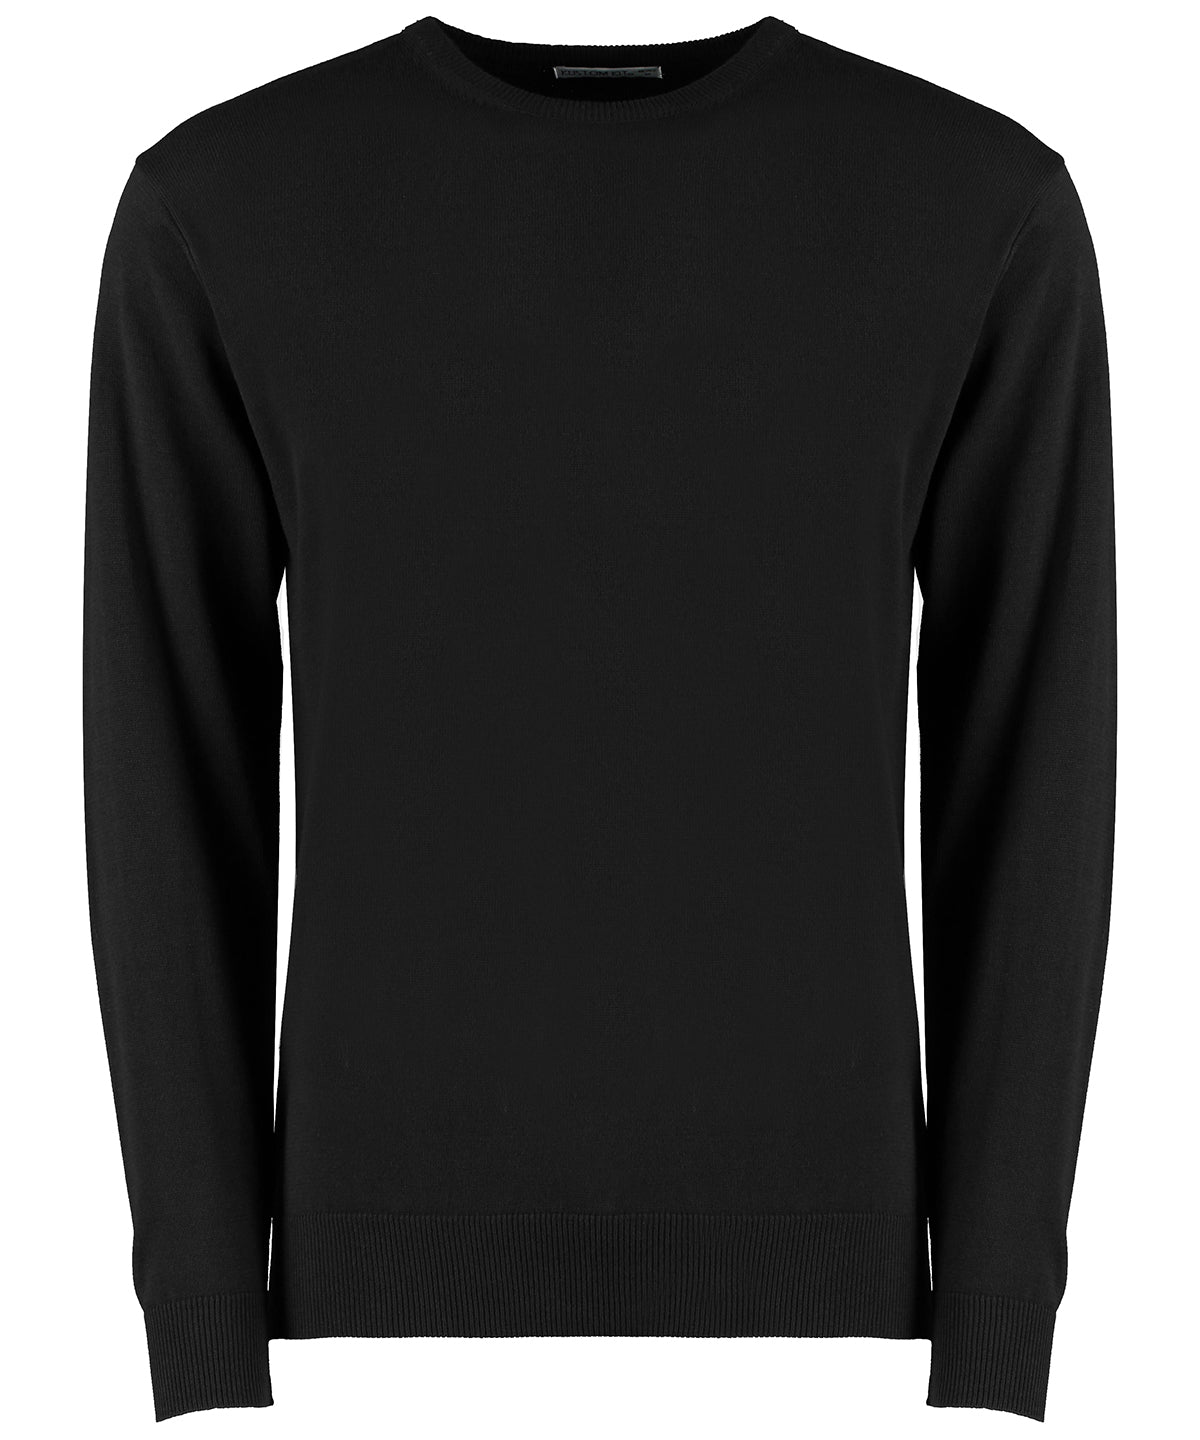 Personalised Knitted Jumpers - Black Kustom Kit Regular fit Arundel crew neck sweater